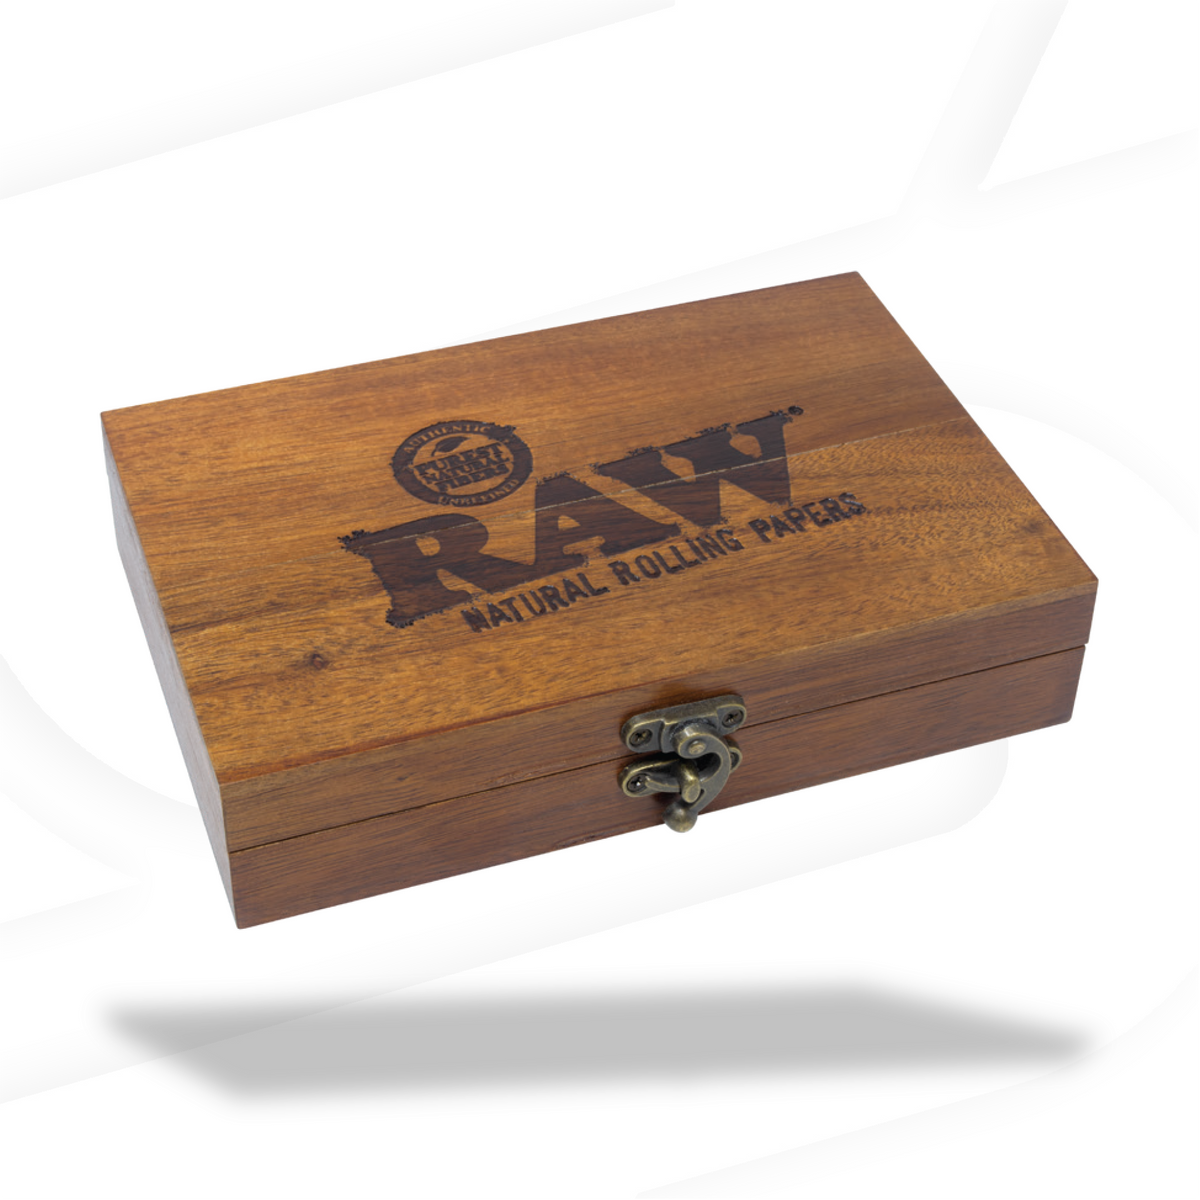 RAW Double Six Dominoes Lifestyle RAWU-LFXX-0049 esd-official